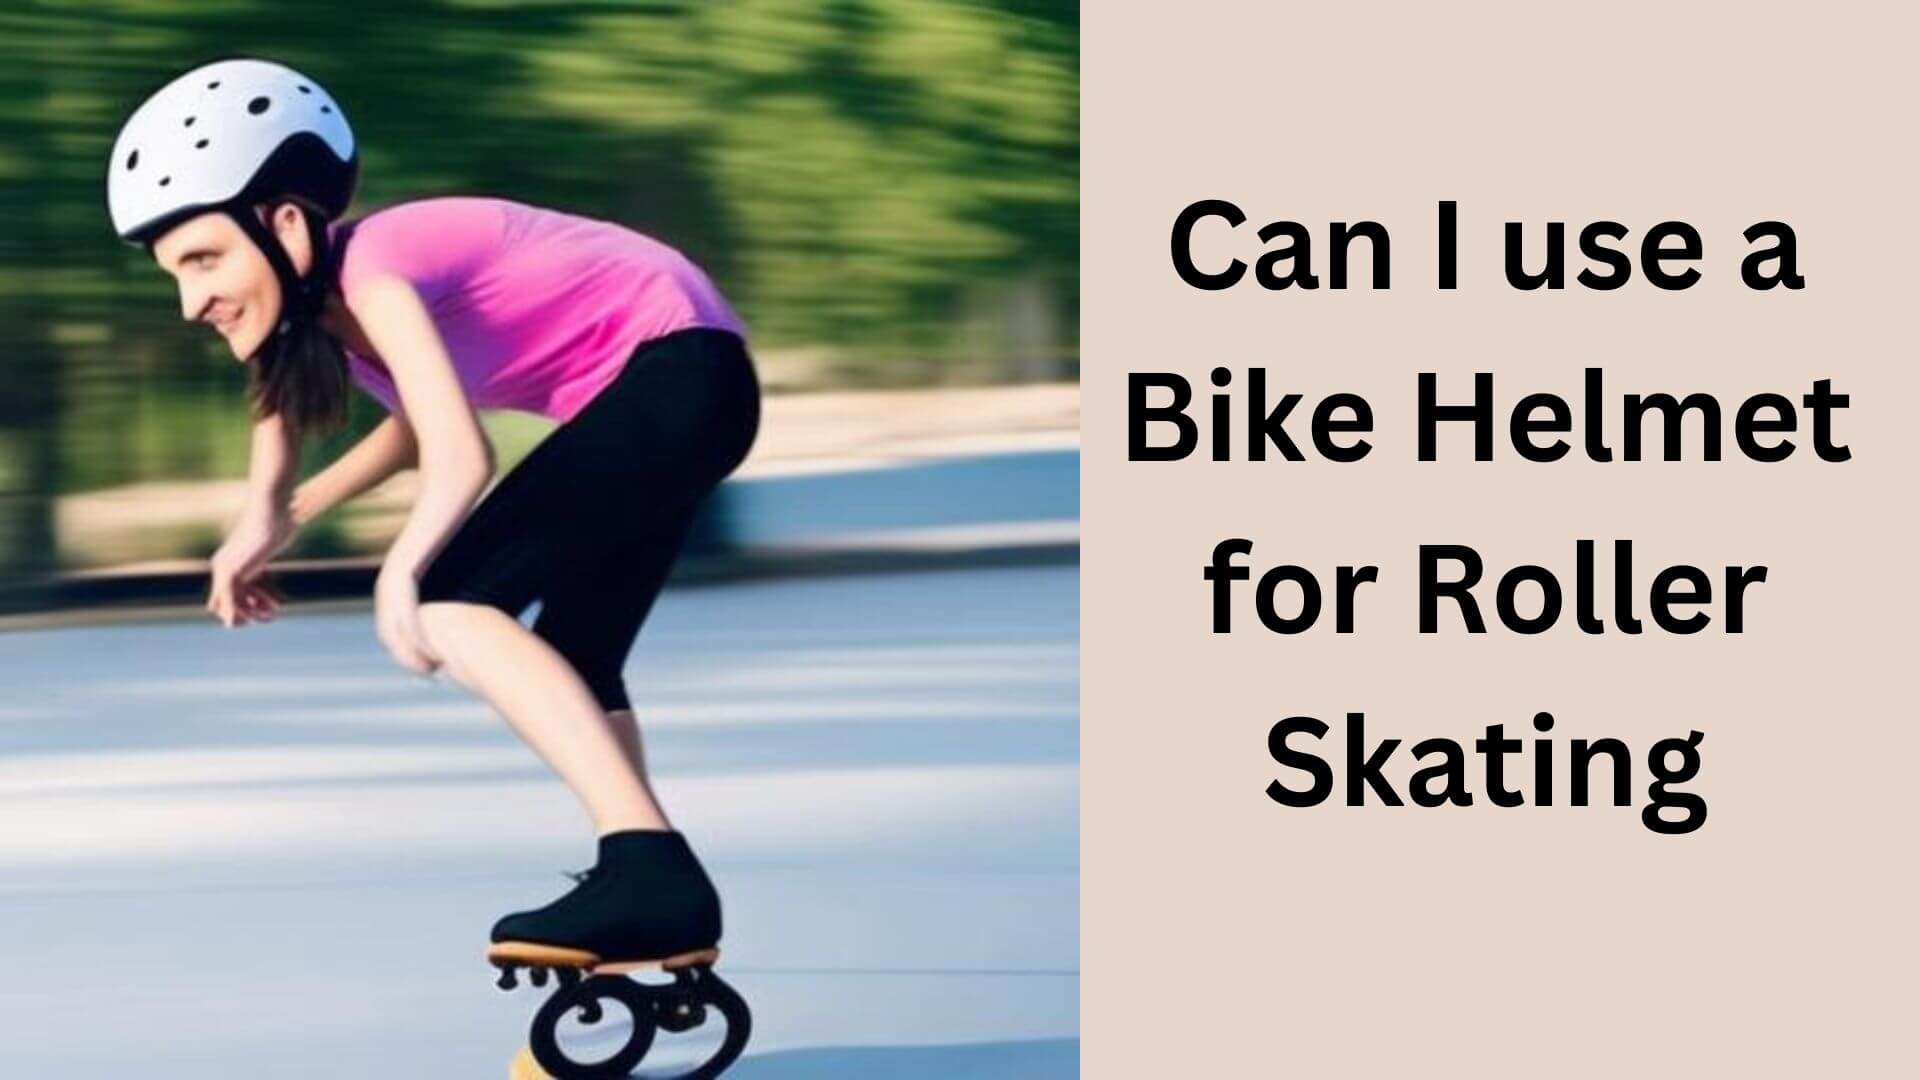 Can I use a Bike Helmet for Roller Skating?